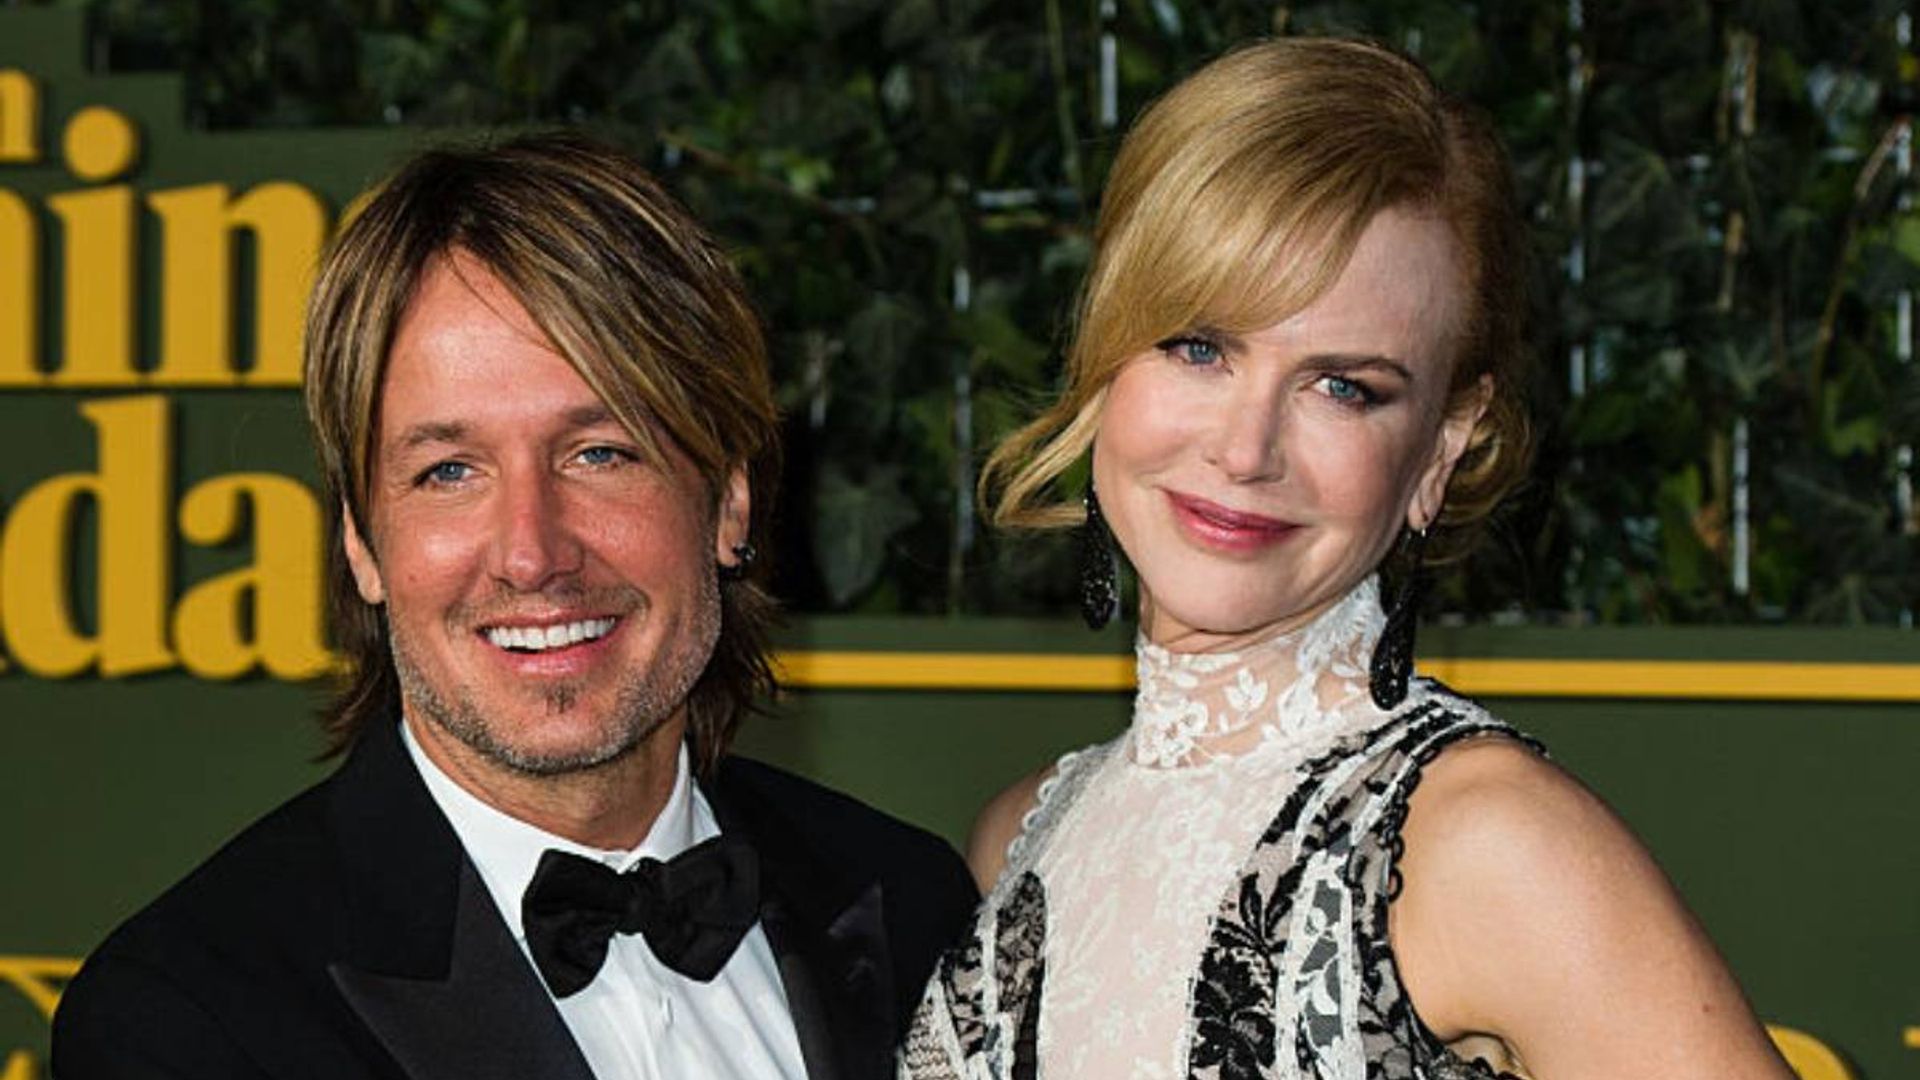 Nicole Kidman's nickname revealed in sweet note from husband Keith Urban